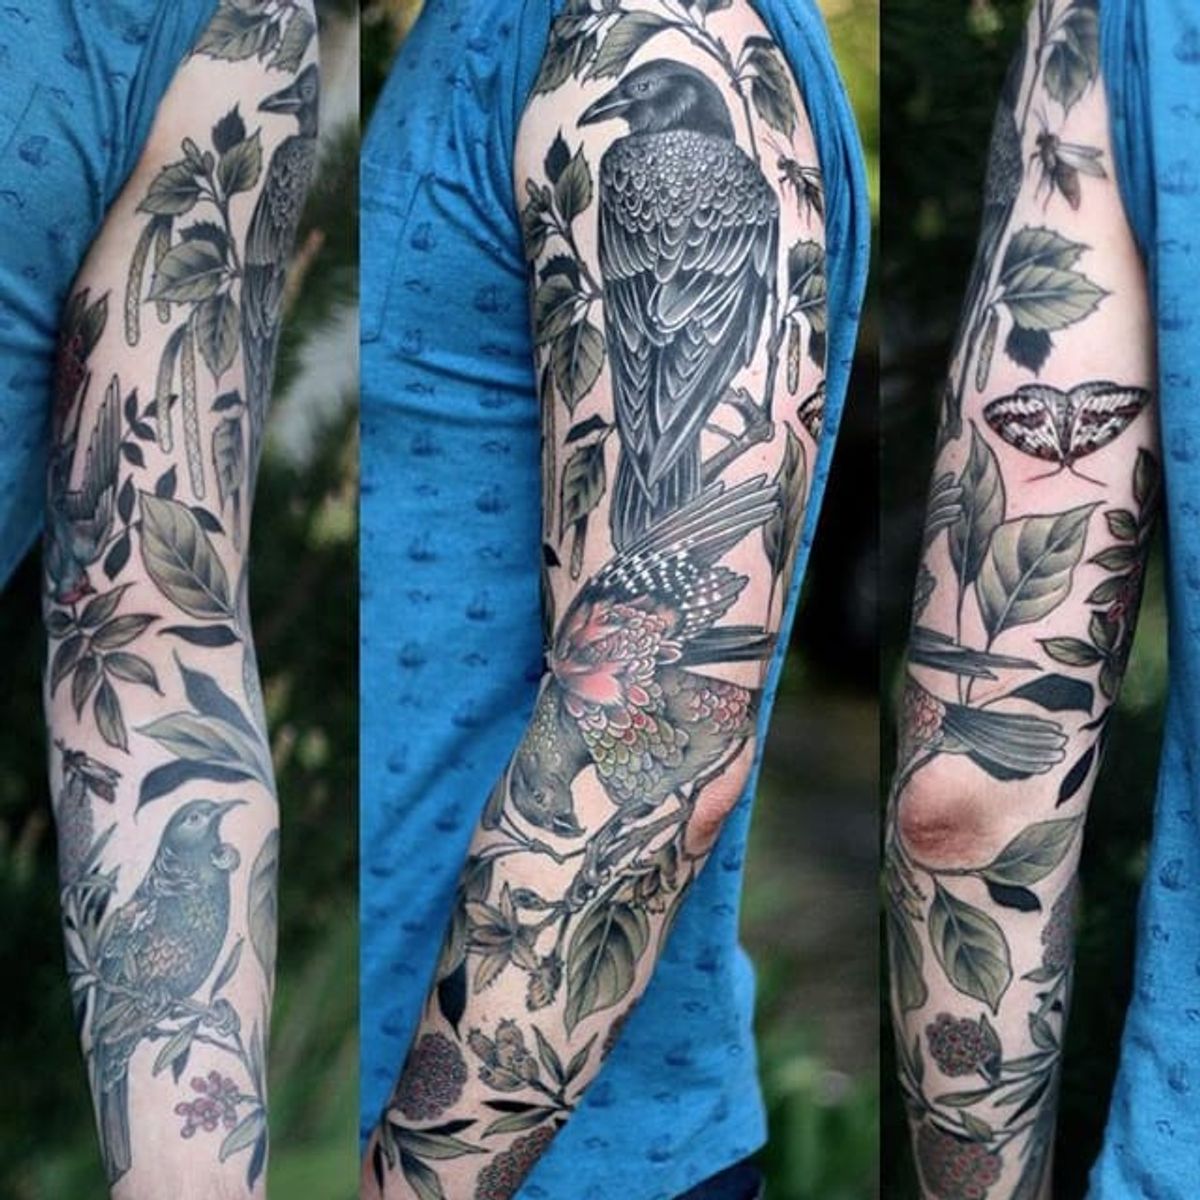 Tattoo uploaded by Ross Howerton • A whimsical sleeve full of ...